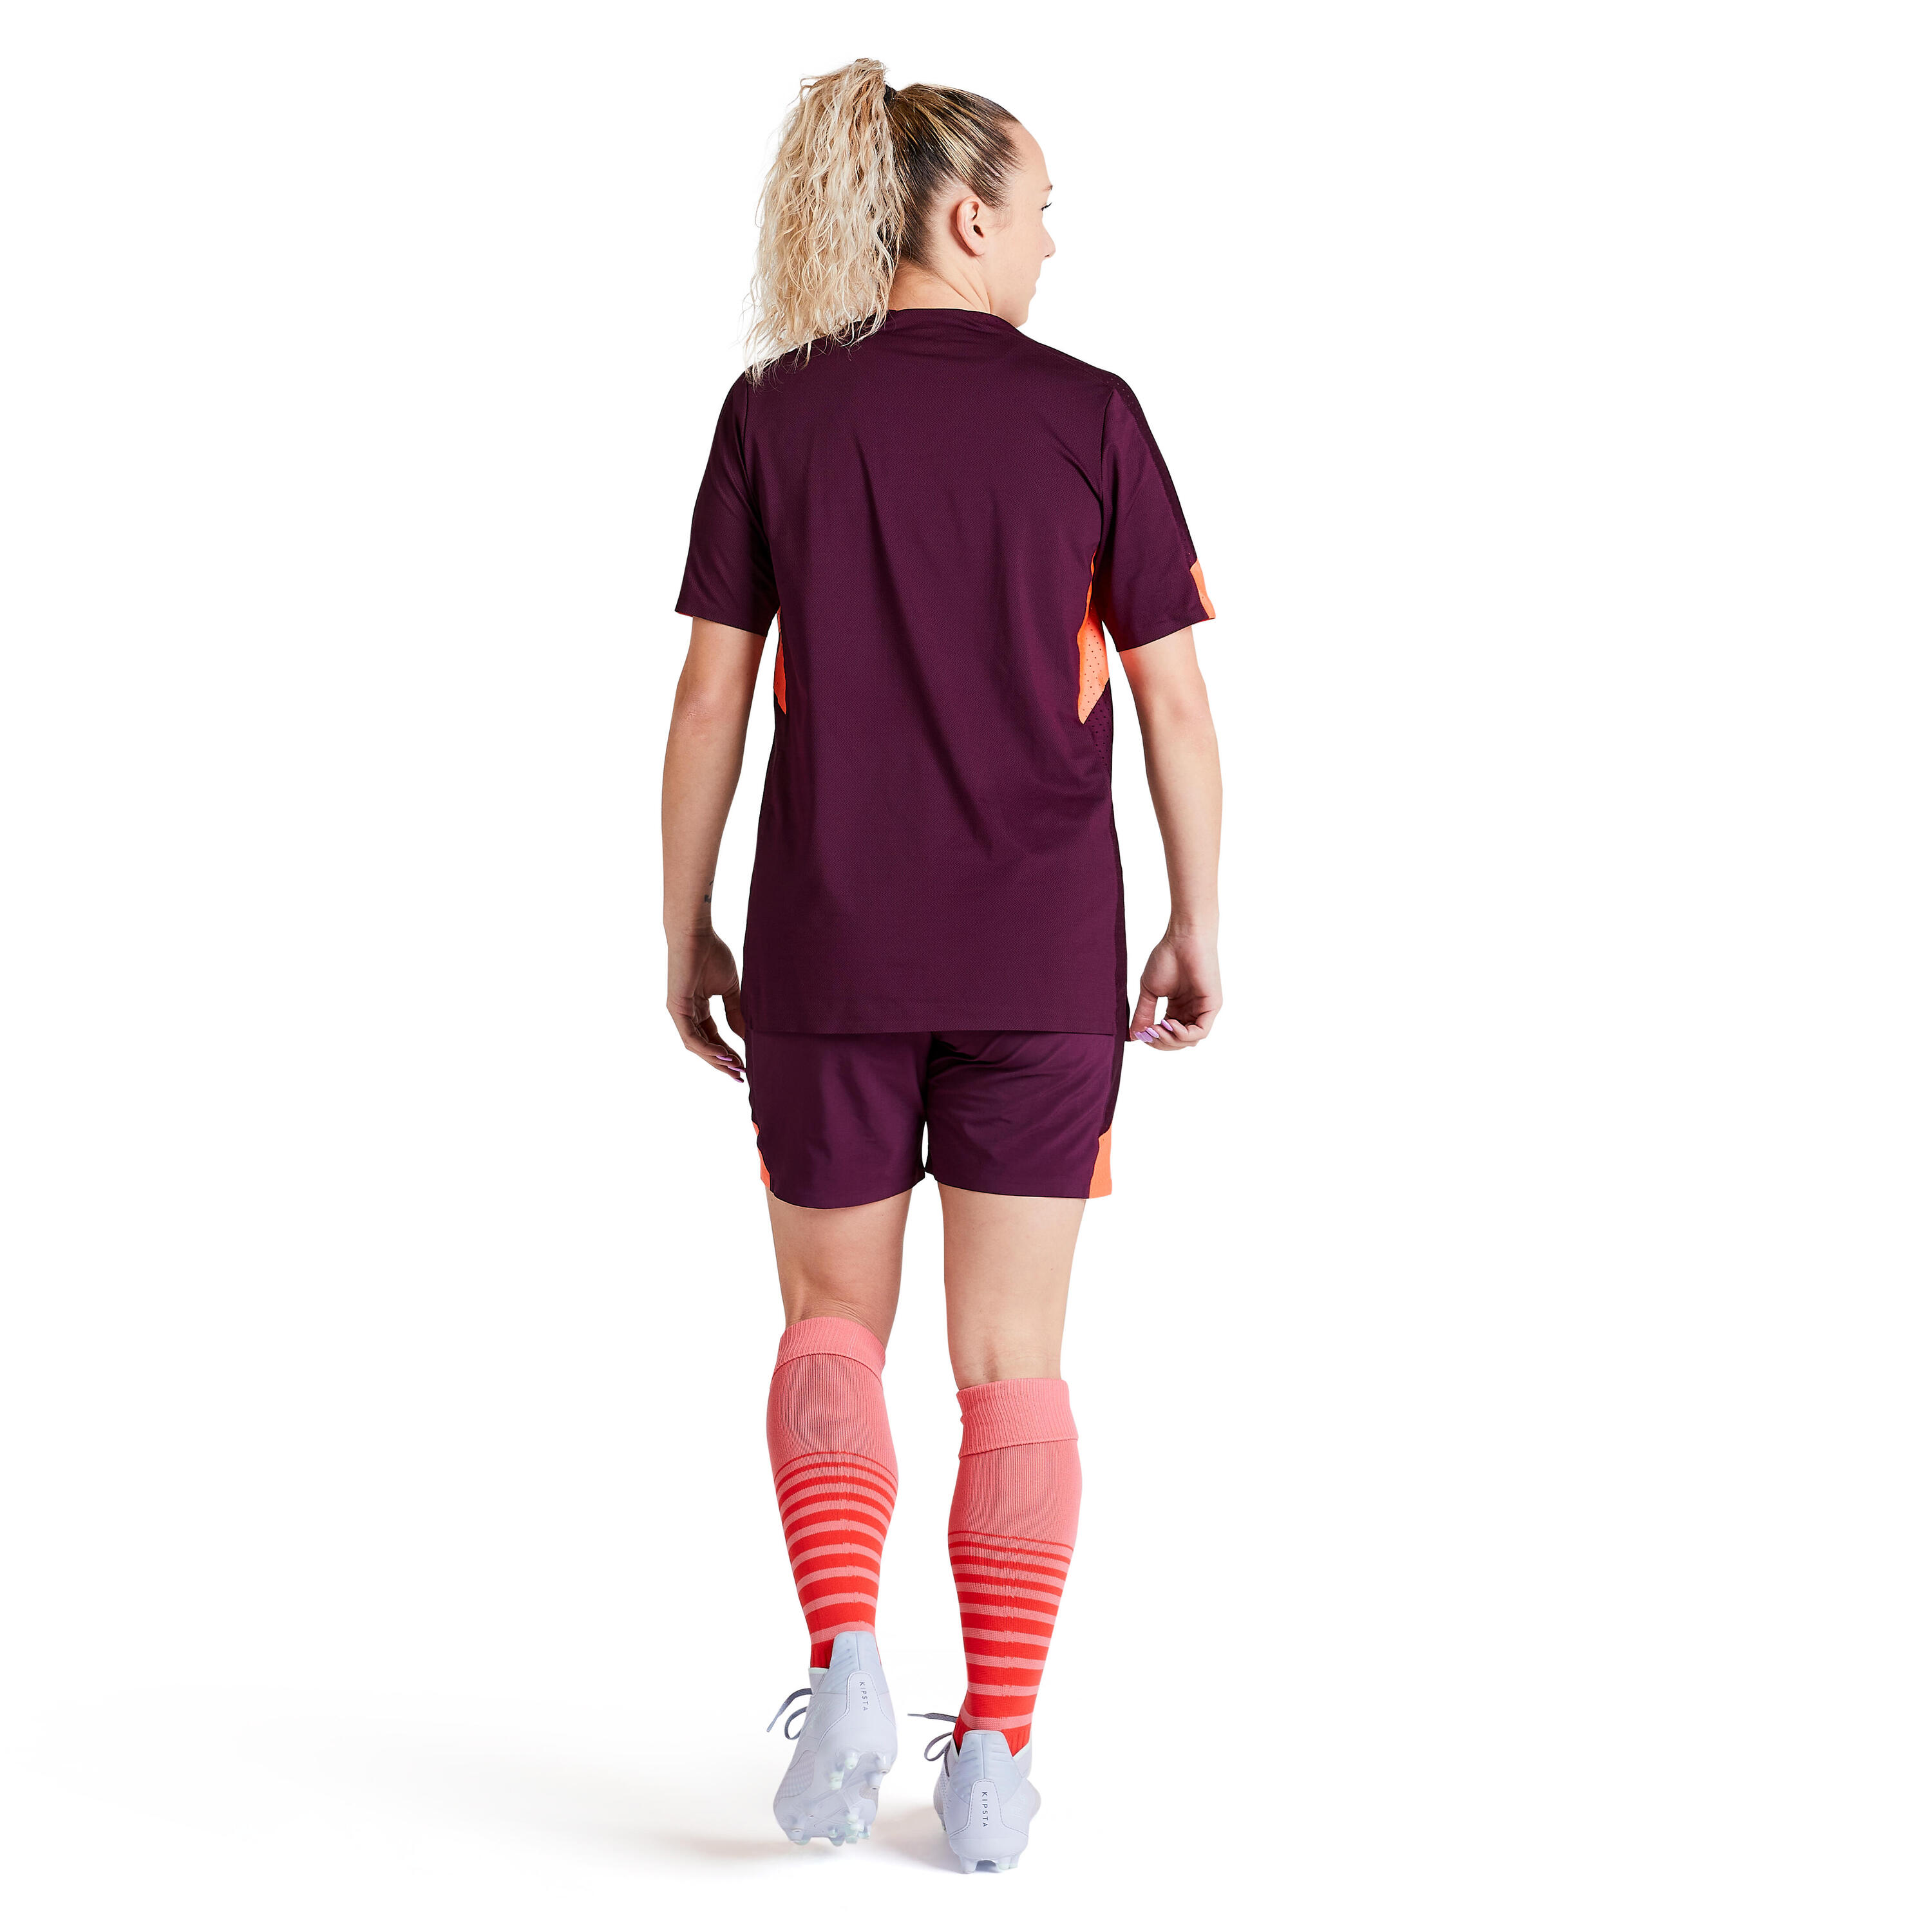 Women's Football Shorts F900 - Purple 4/19